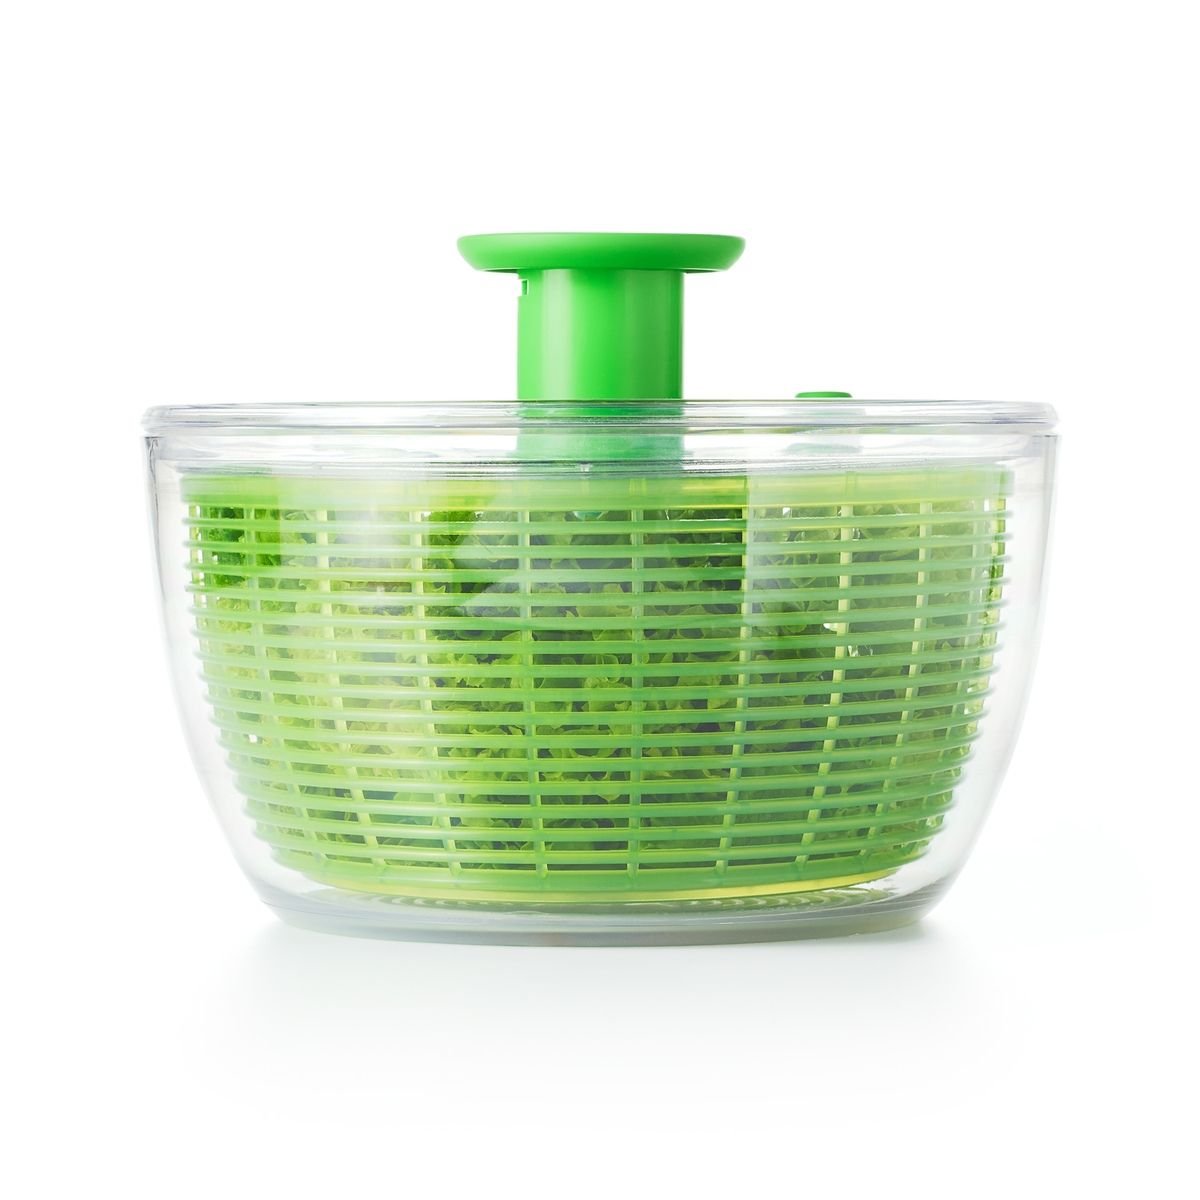 Cuisinart Salad Spinner Green (5 Quart) - New In Box